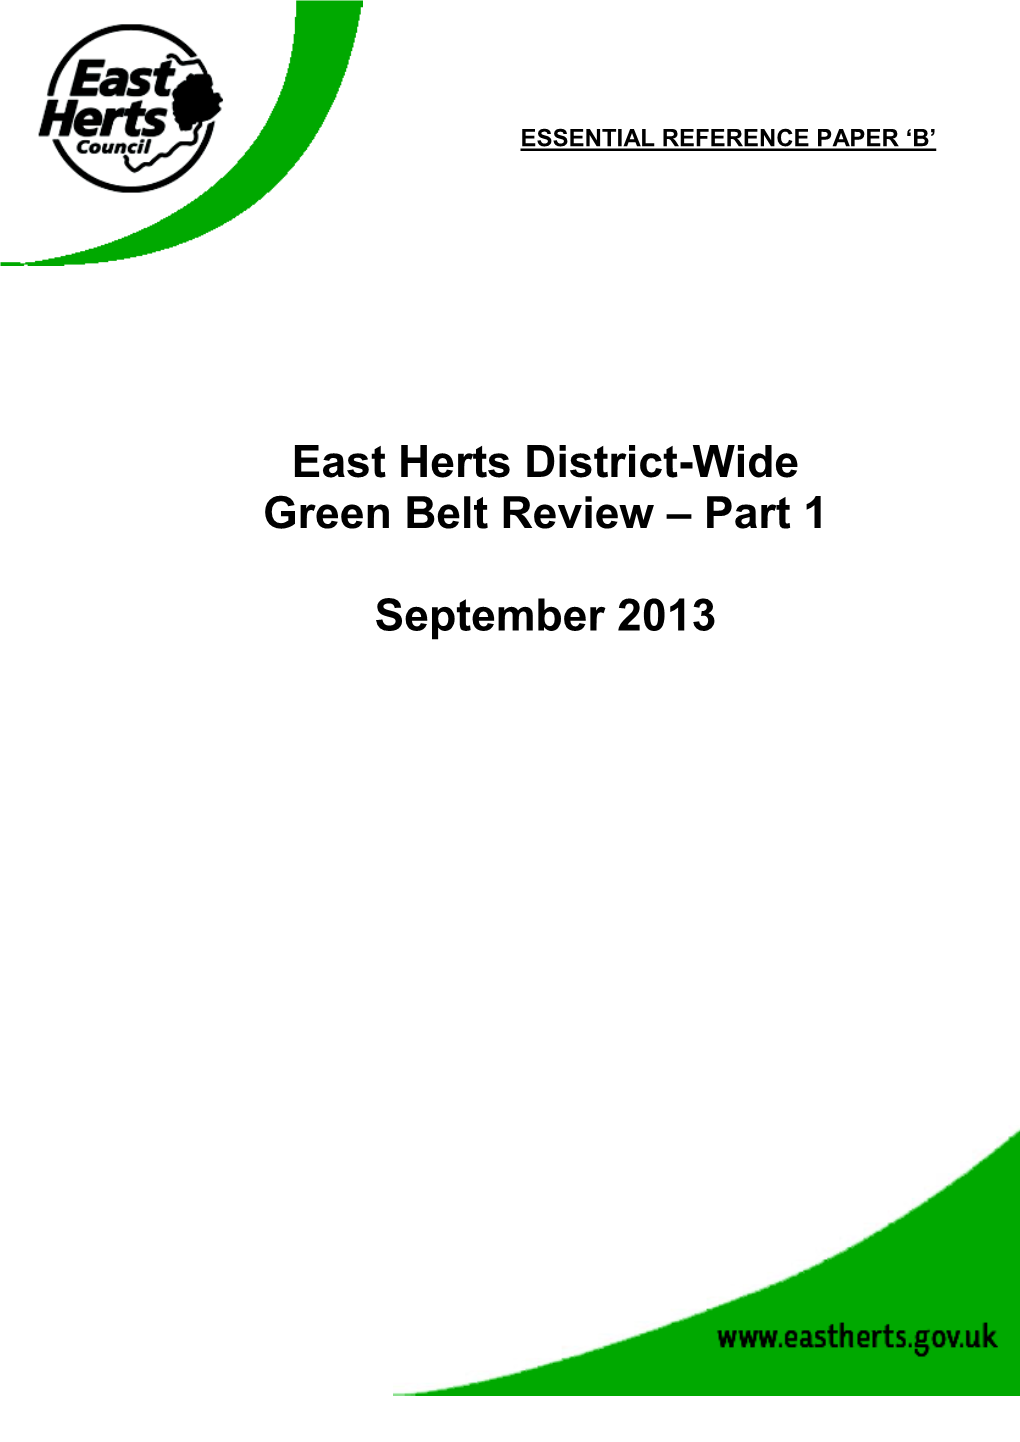 East Herts District-Wide Green Belt Review – Part 1 September 2013